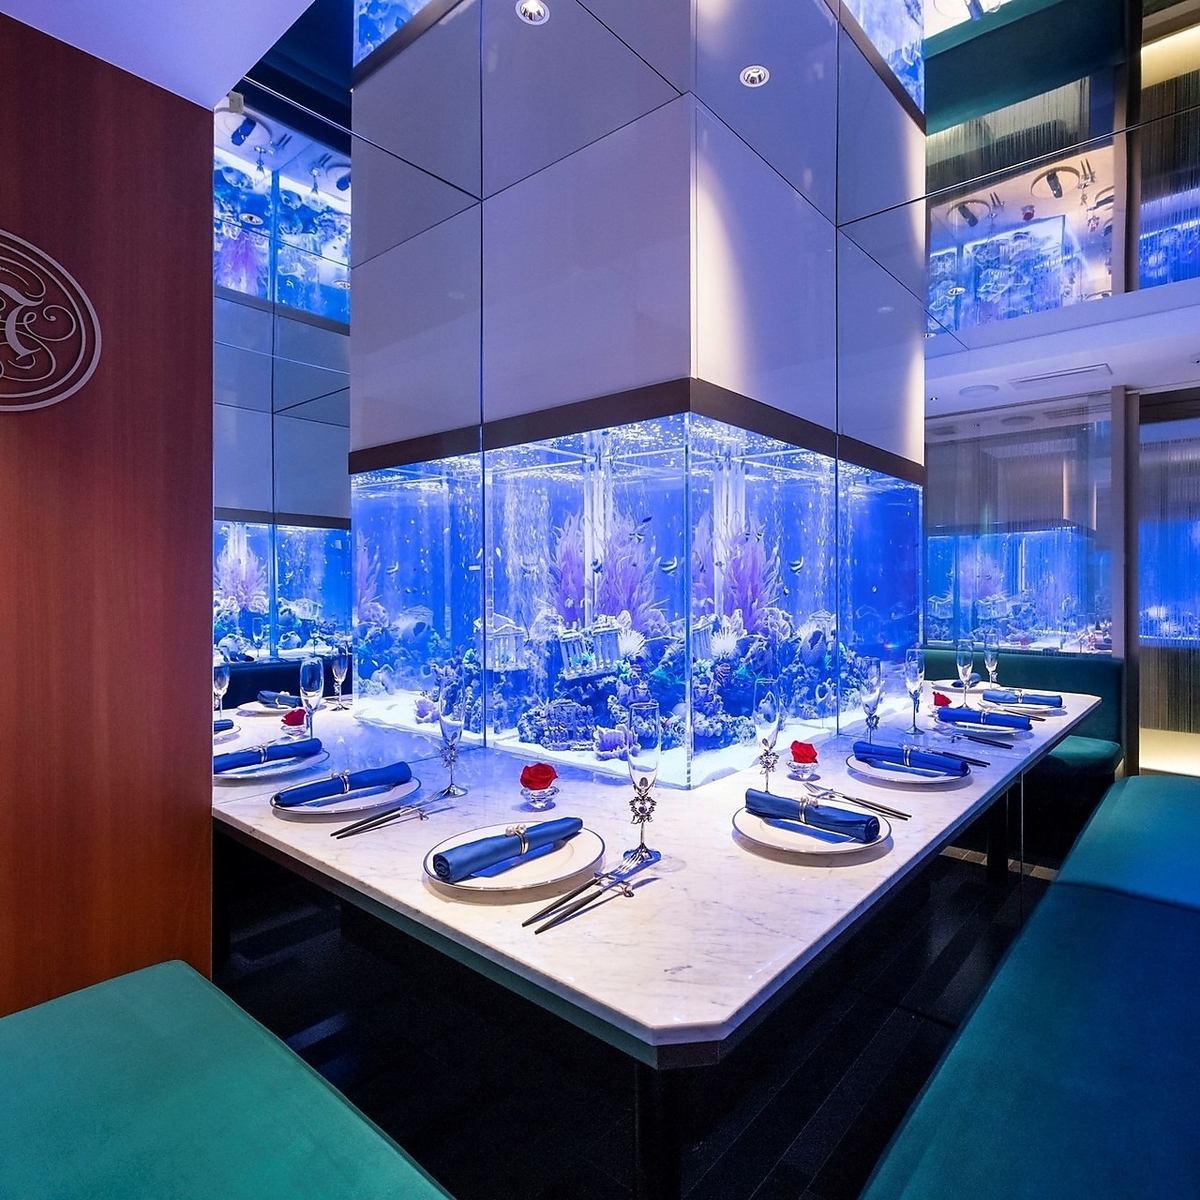 A masterpiece aquarium restaurant designed by famous designer Tetsuya Matsumoto